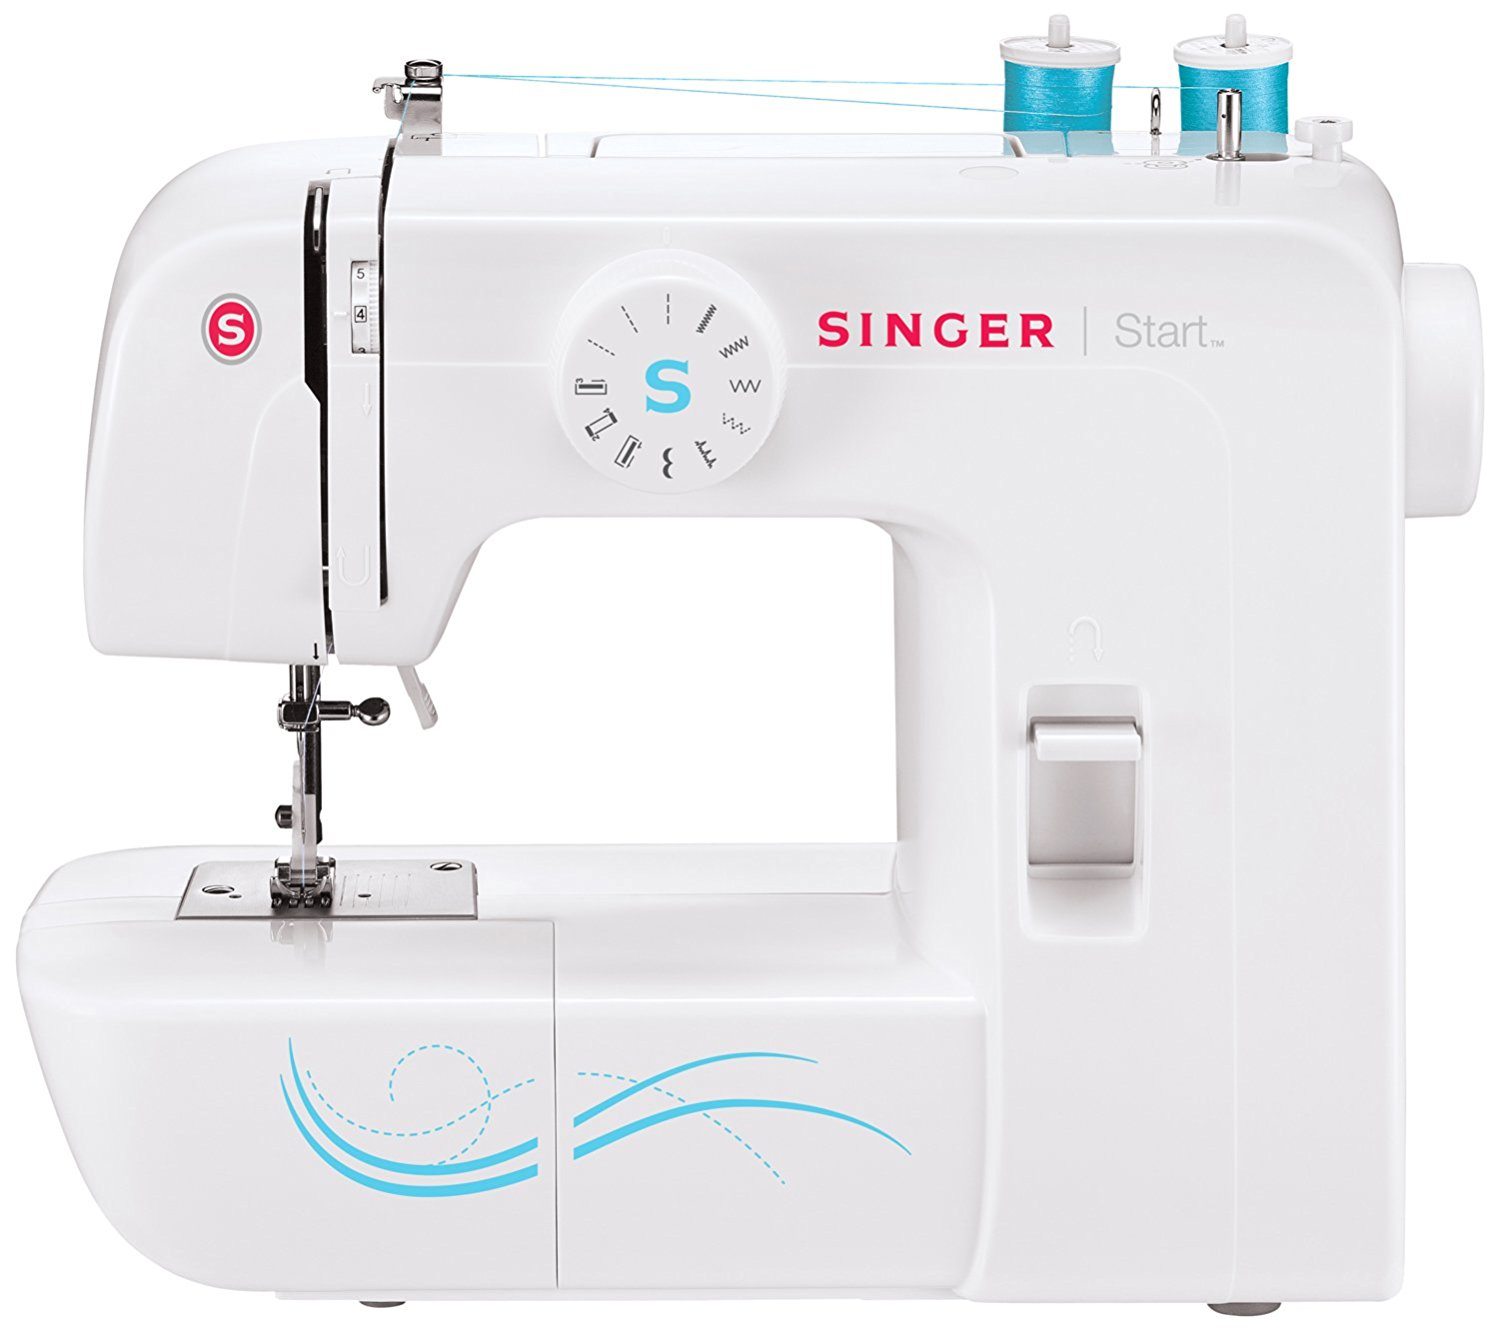 singer start 1304 sewing machine isolated on white background